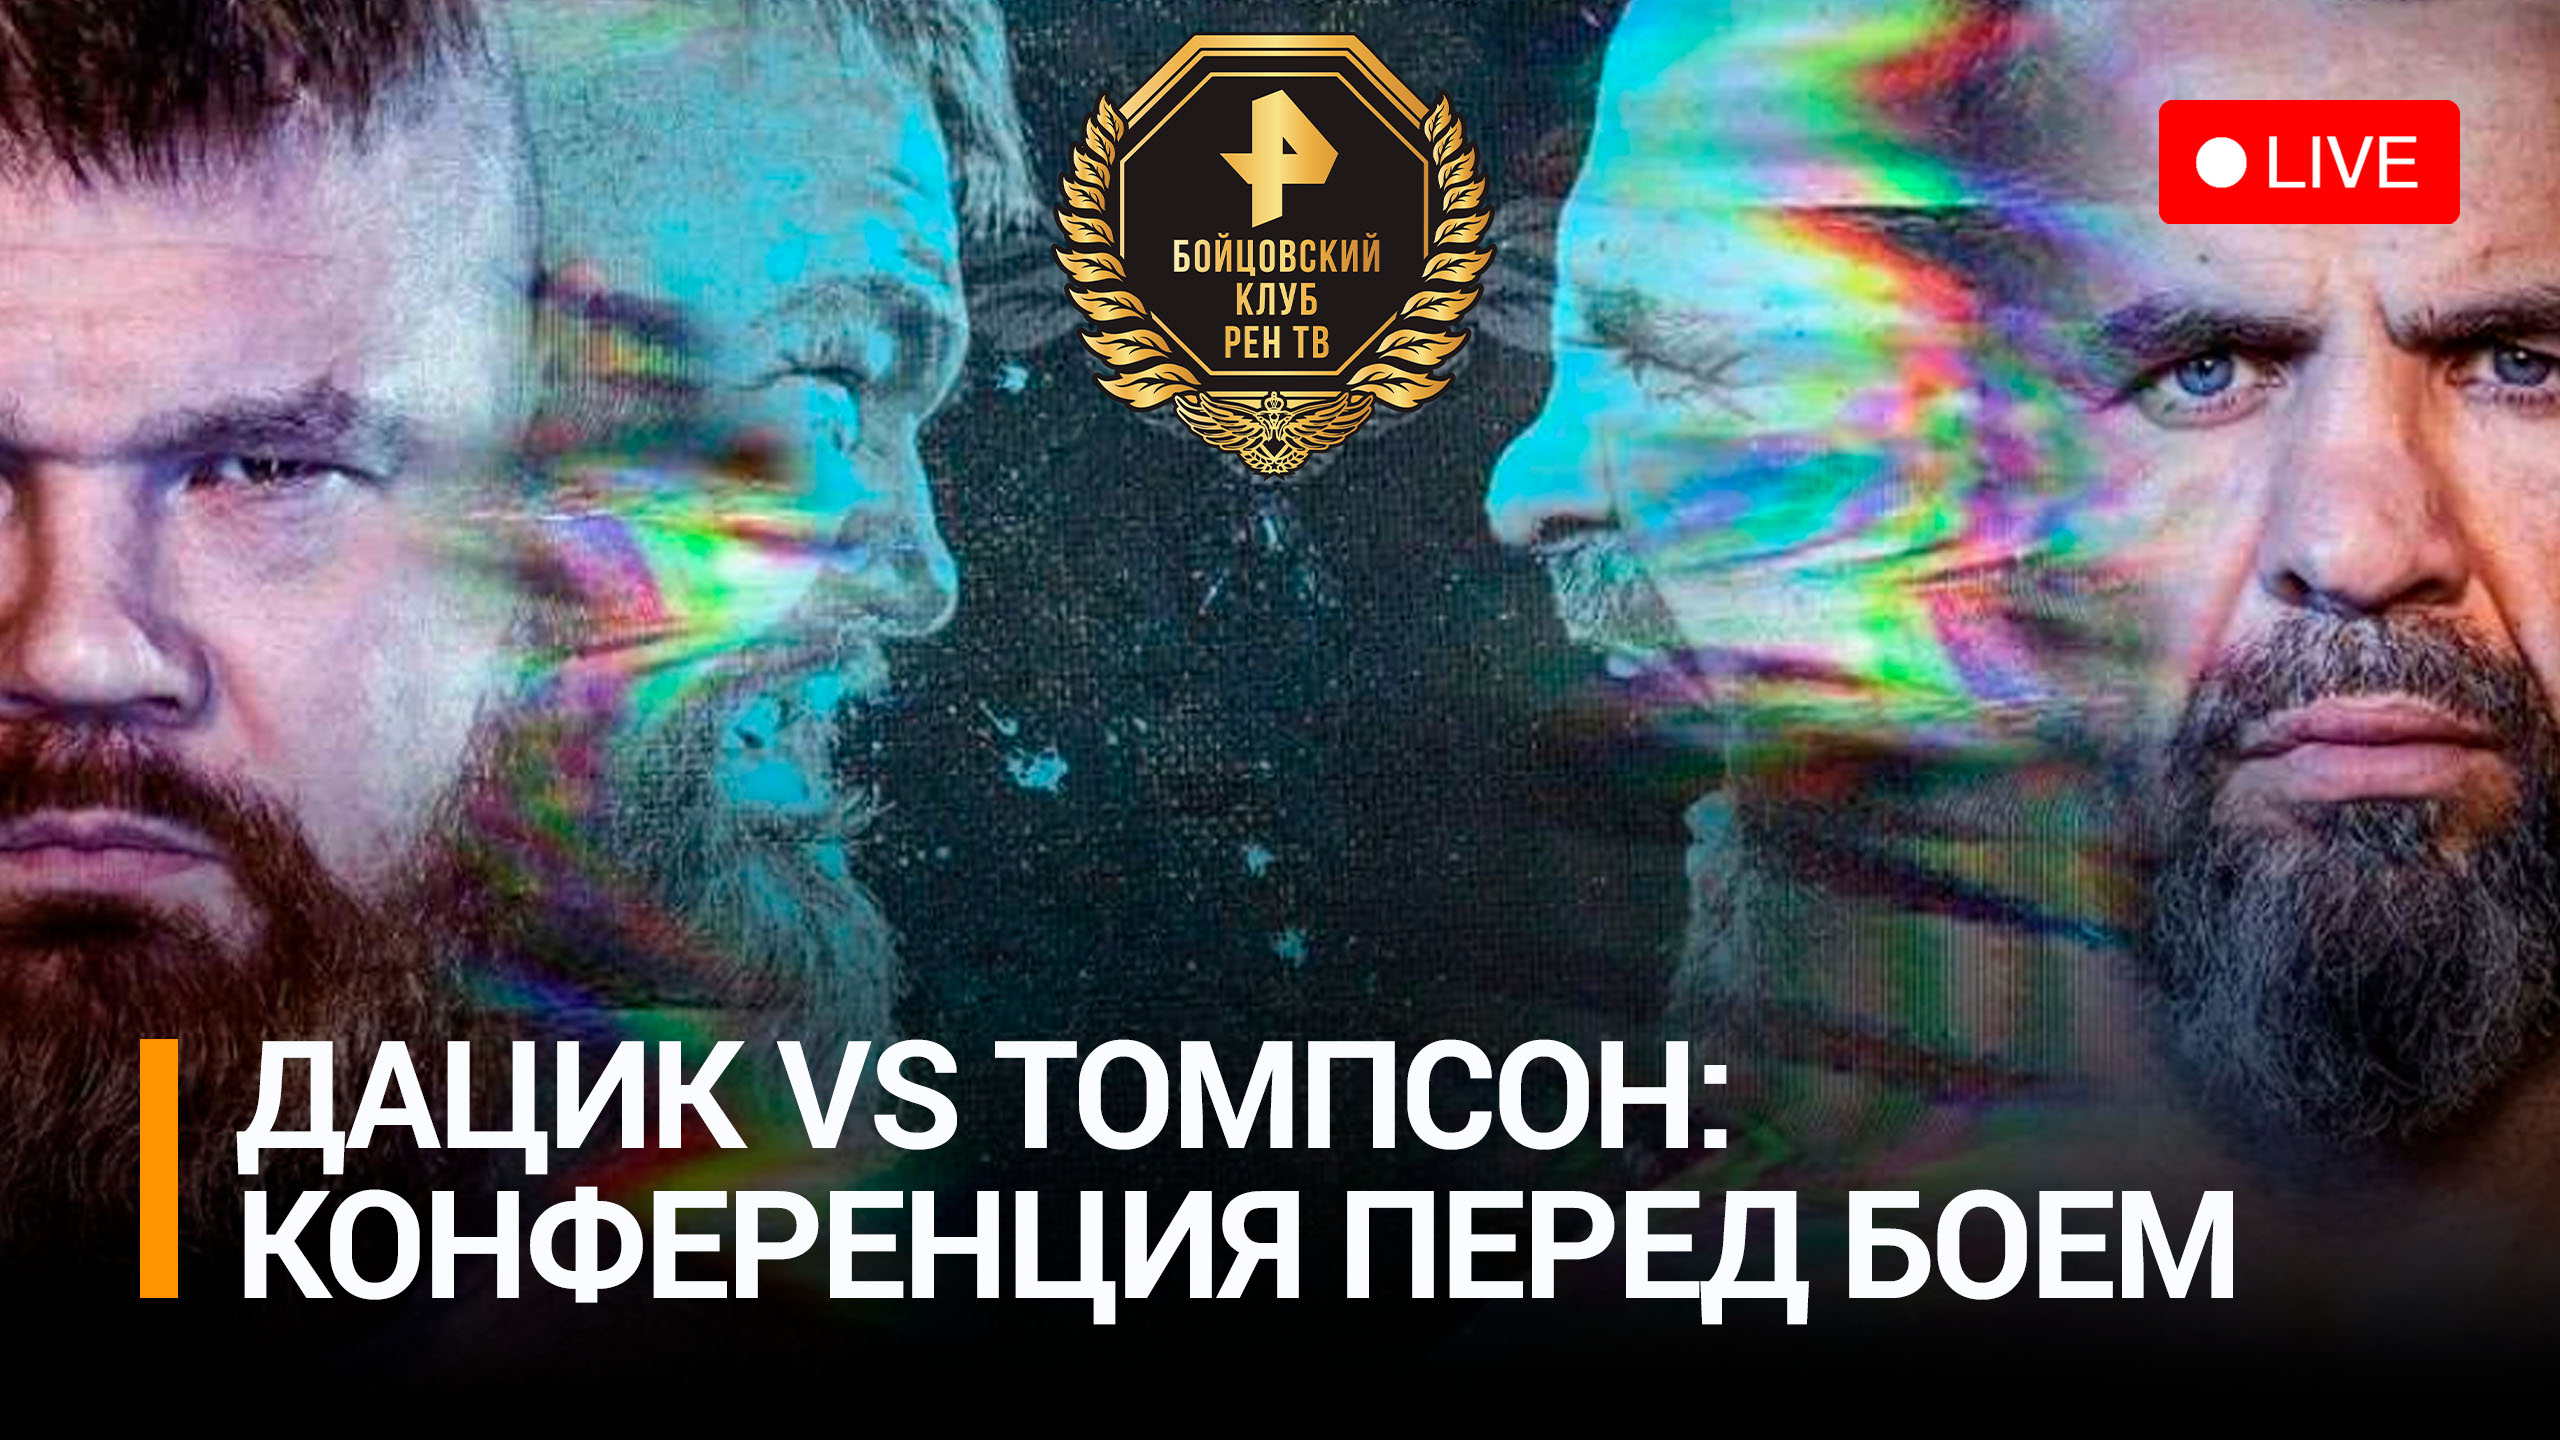 Дацик vs Томпсон: конференция перед боем «Бойцовского клуба РЕН ТВ. Суперсерия»